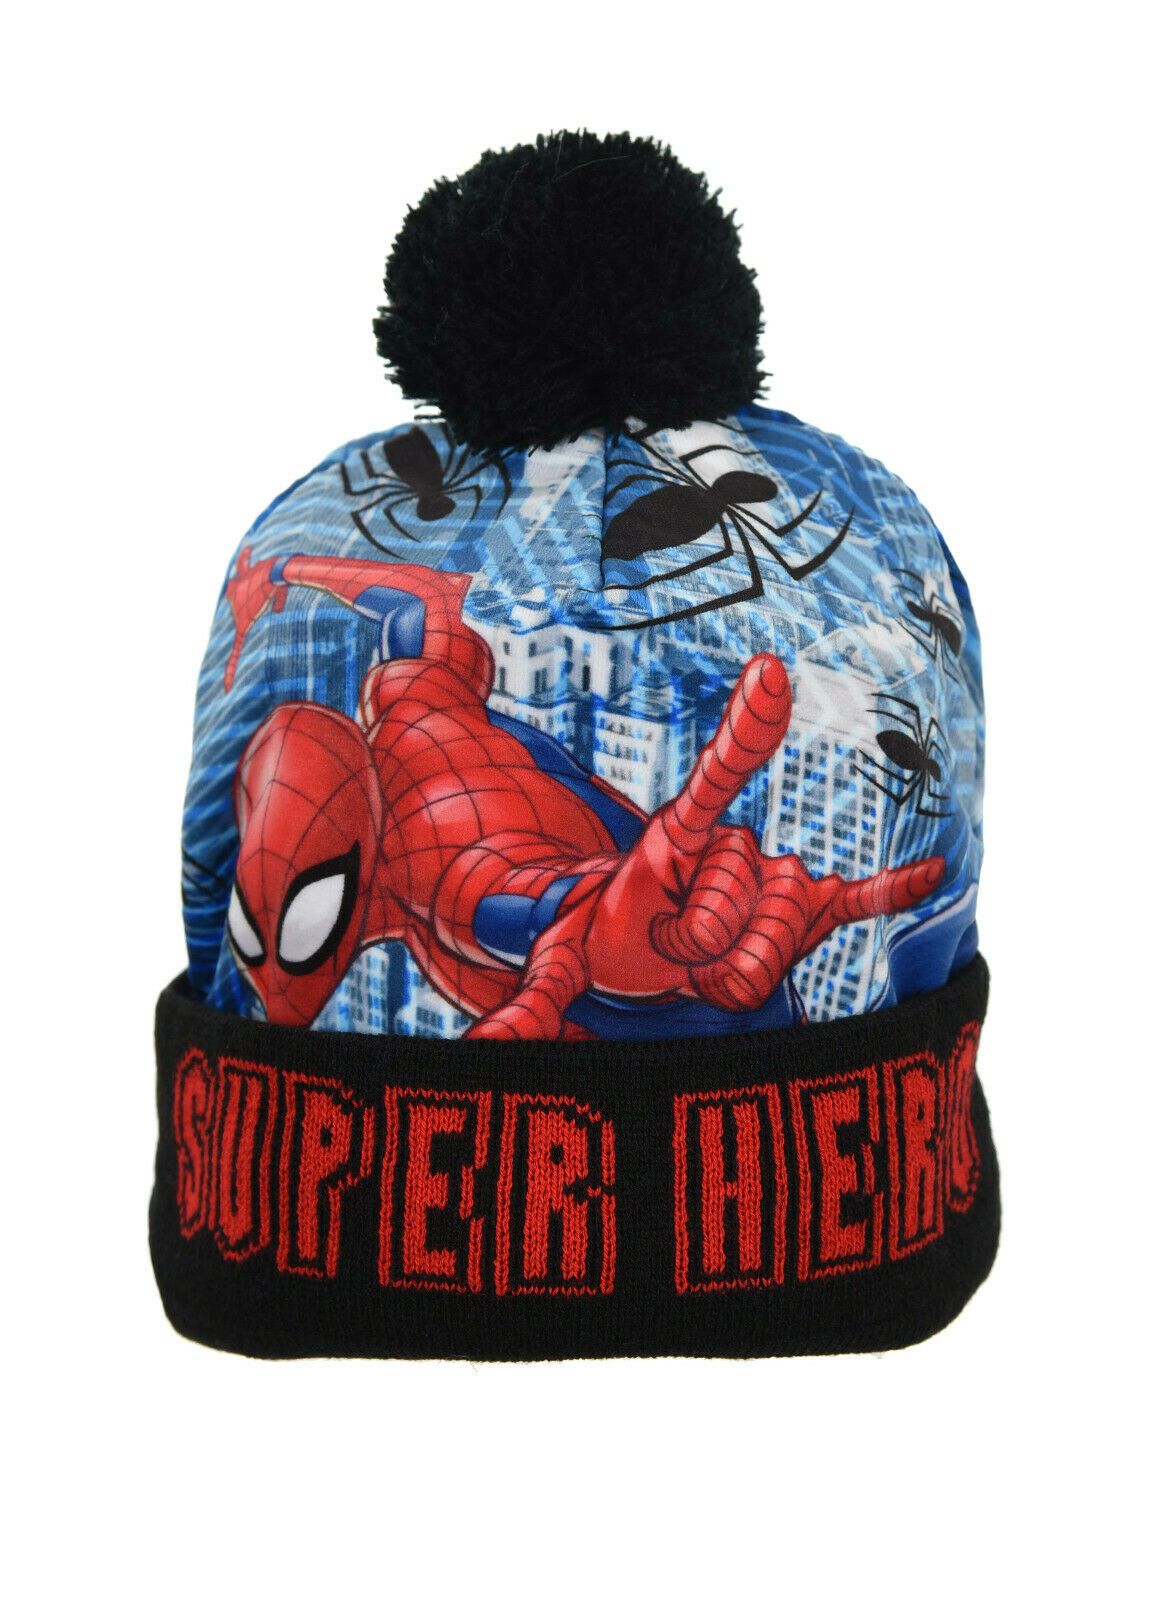 Children's Licensed Spiderman Black Bobble Hat. Ages 2-6 & 7-10 Available.